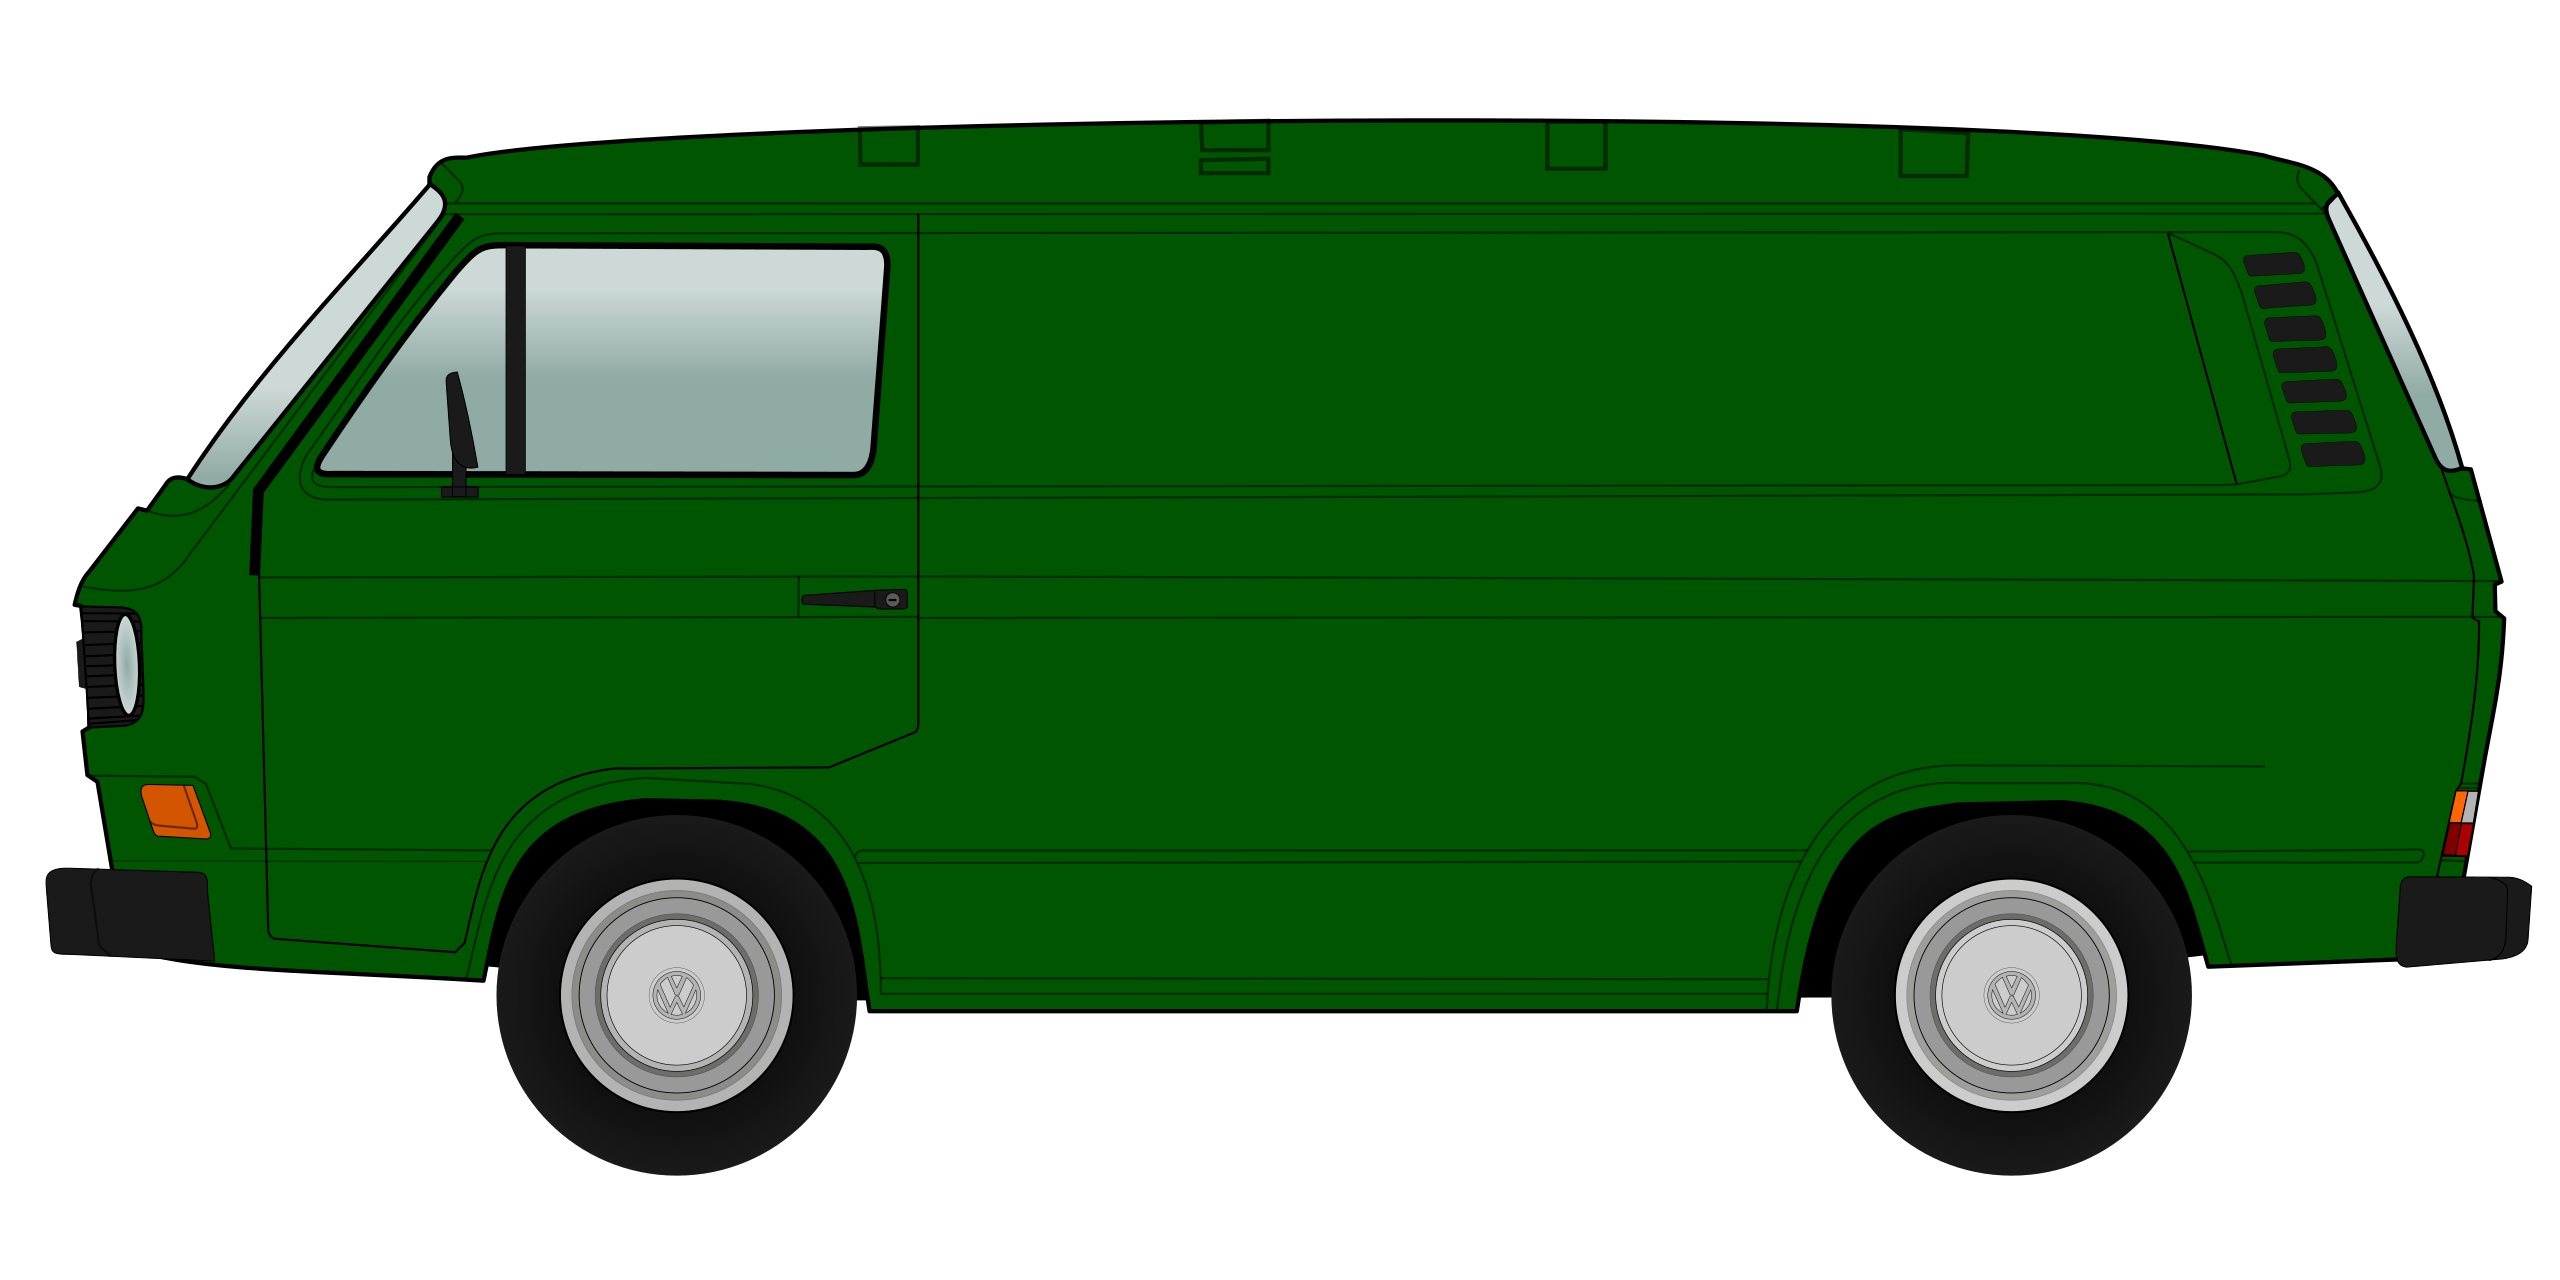 File:Volkswagen T3 1.6 D (17272288338).jpg - Wikimedia Commons